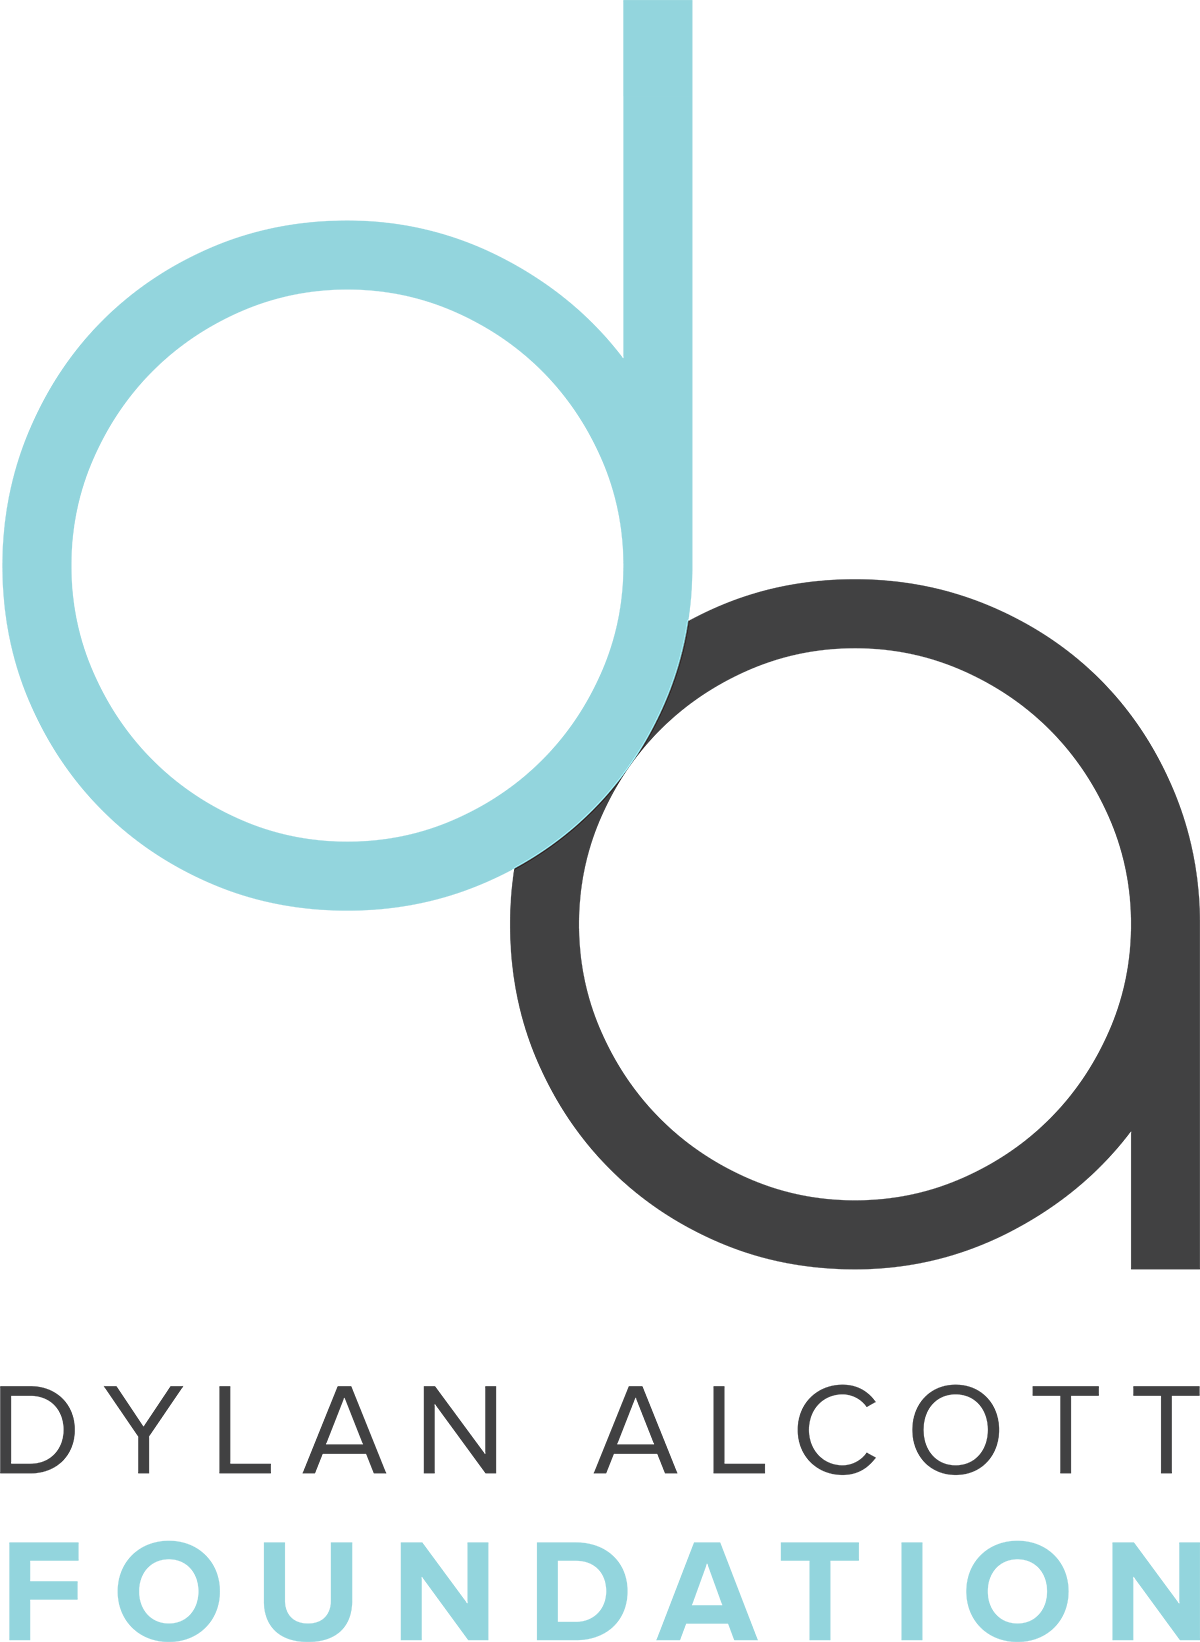 Dylan Alcott Foundation